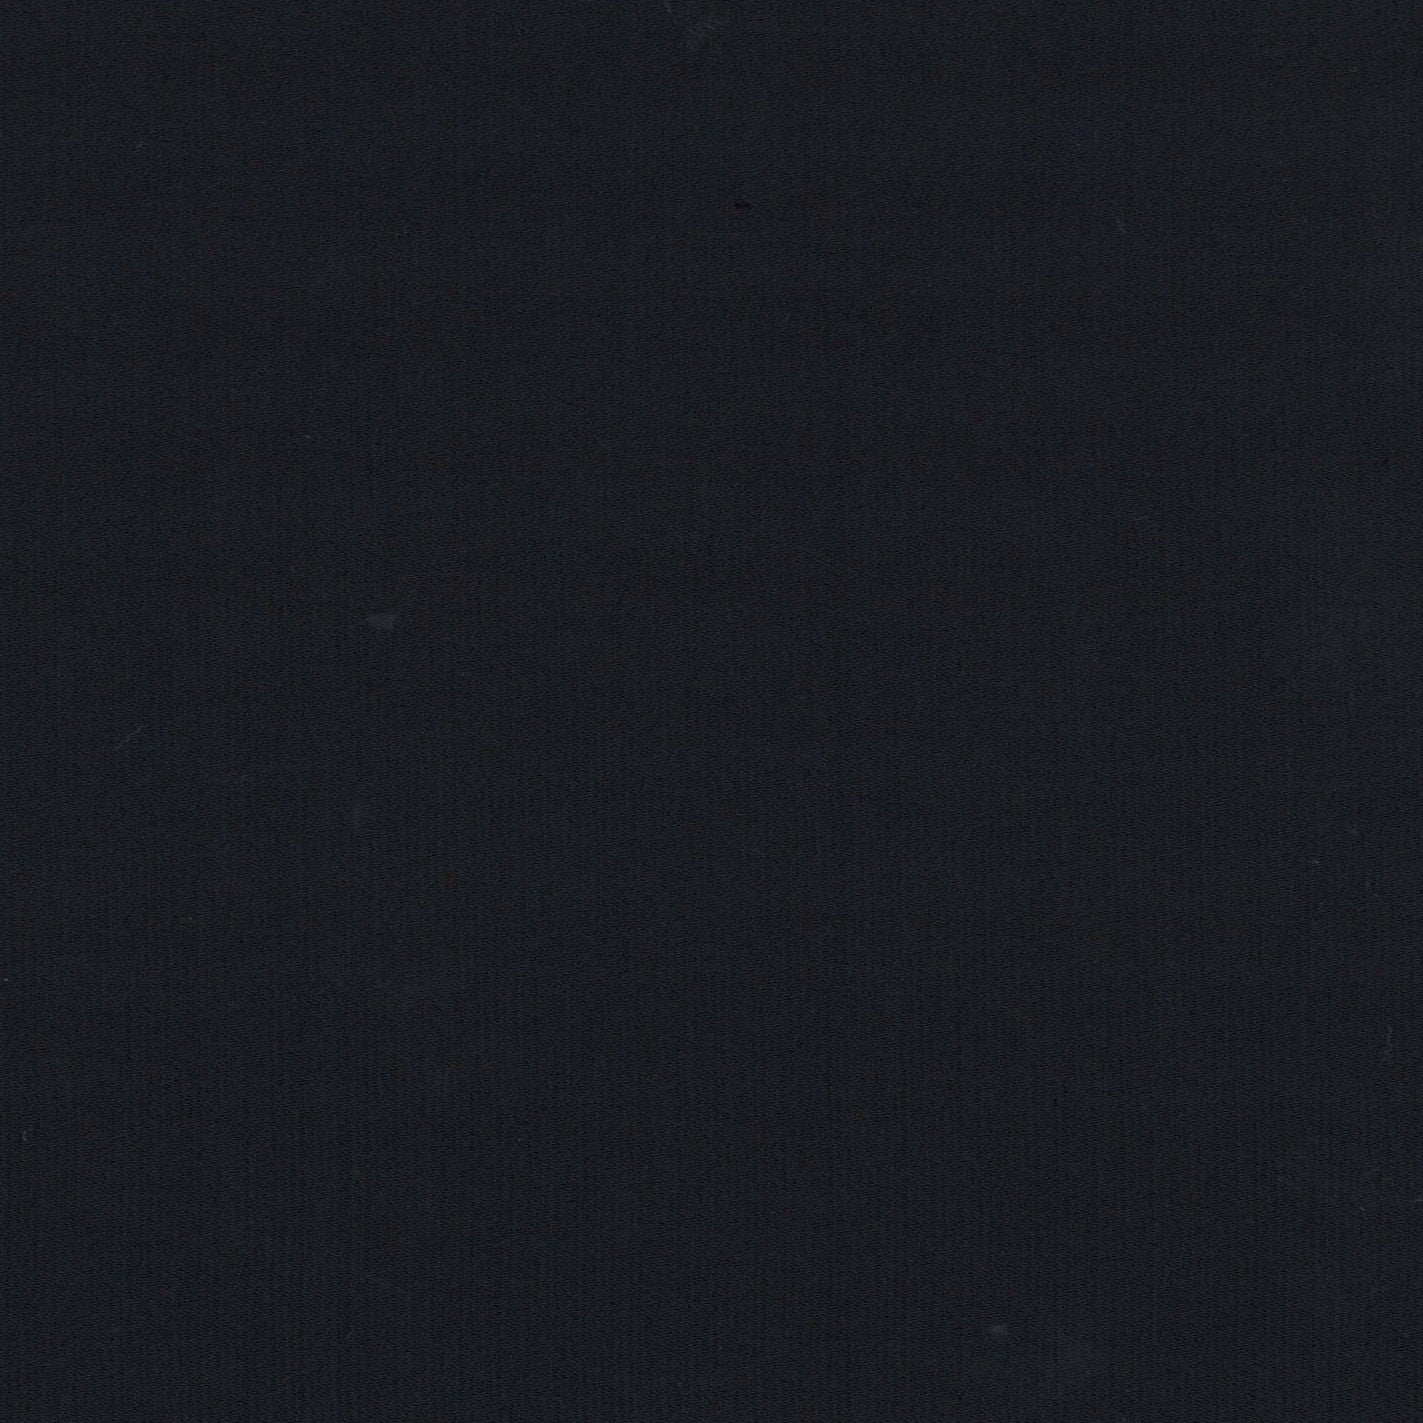 36033-06 Dark Deep Navy Polyester Plain Dyed 233g/yd 56" blue plain dyed polyester woven Solid Color - knit fabric - woven fabric - fabric company - fabric wholesale - fabric b2b - fabric factory - high quality fabric - hong kong fabric - fabric hk - acetate fabric - cotton fabric - linen fabric - metallic fabric - nylon fabric - polyester fabric - spandex fabric - chun wing hing - cwh hk - fabric worldwide ship - 針織布 - 梳織布 - 布料公司- 布料批發 - 香港布料 - 秦榮興